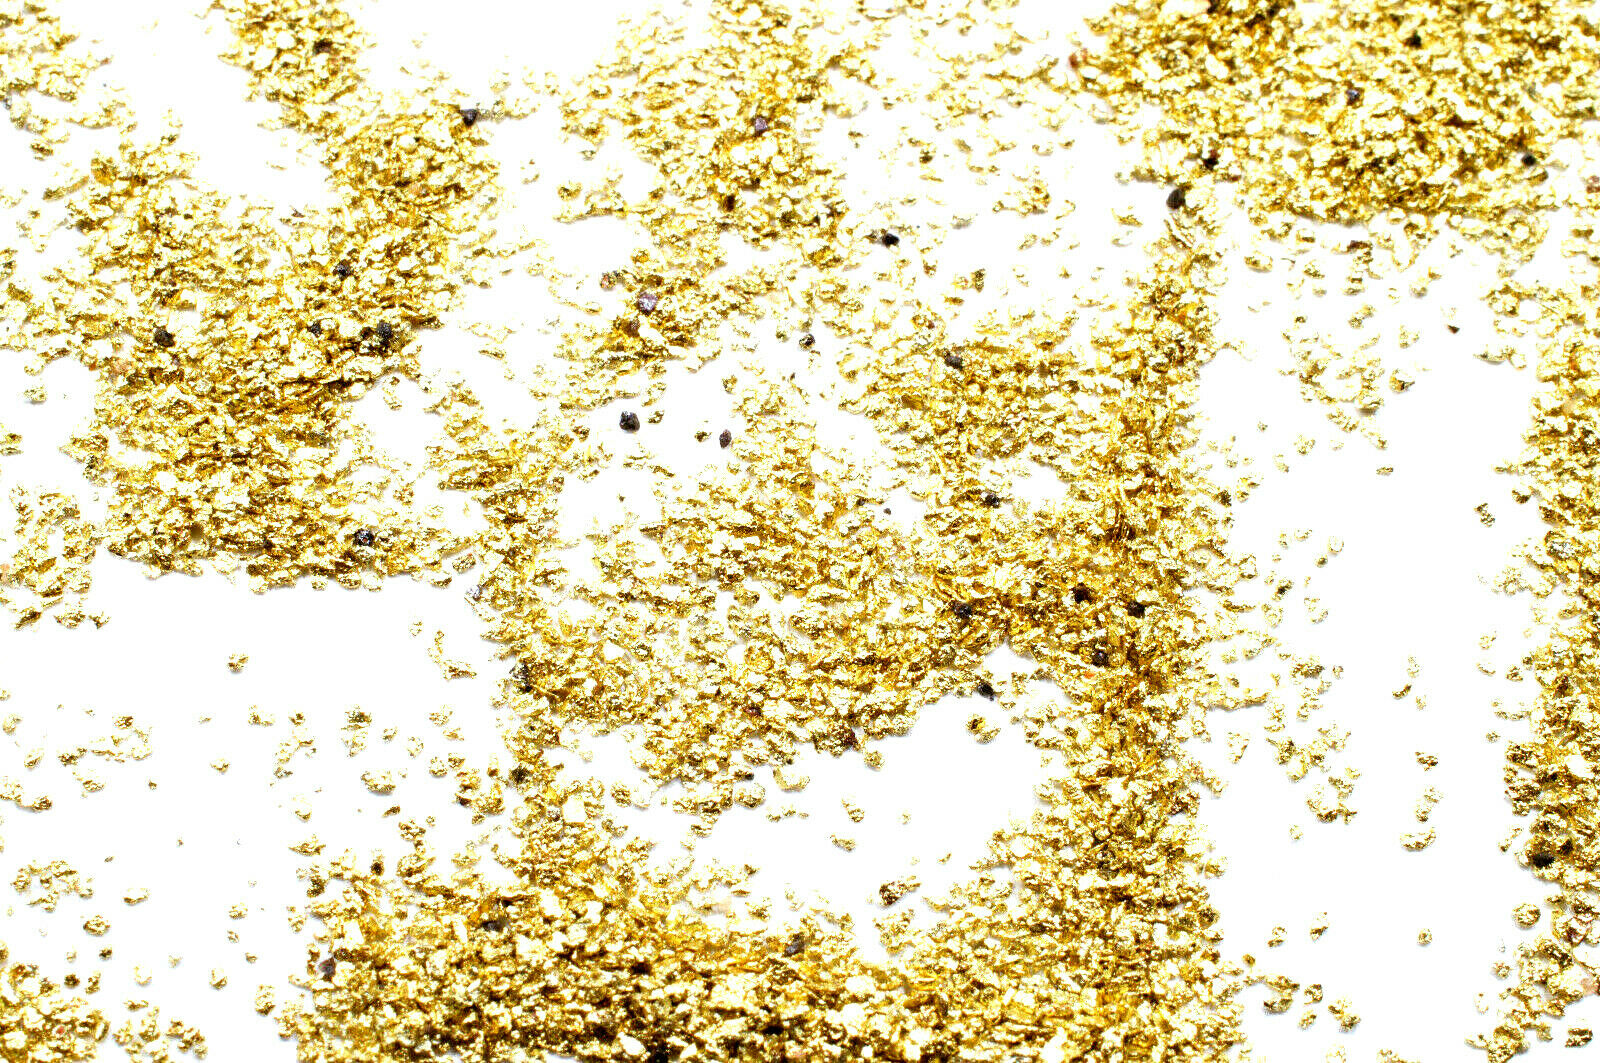 0.250 GRAMS ALASKAN YUKON BC NATURAL PURE GOLD NUGGETS #50 MESH WITH BOTTLE (#B500) - Liquidbullion